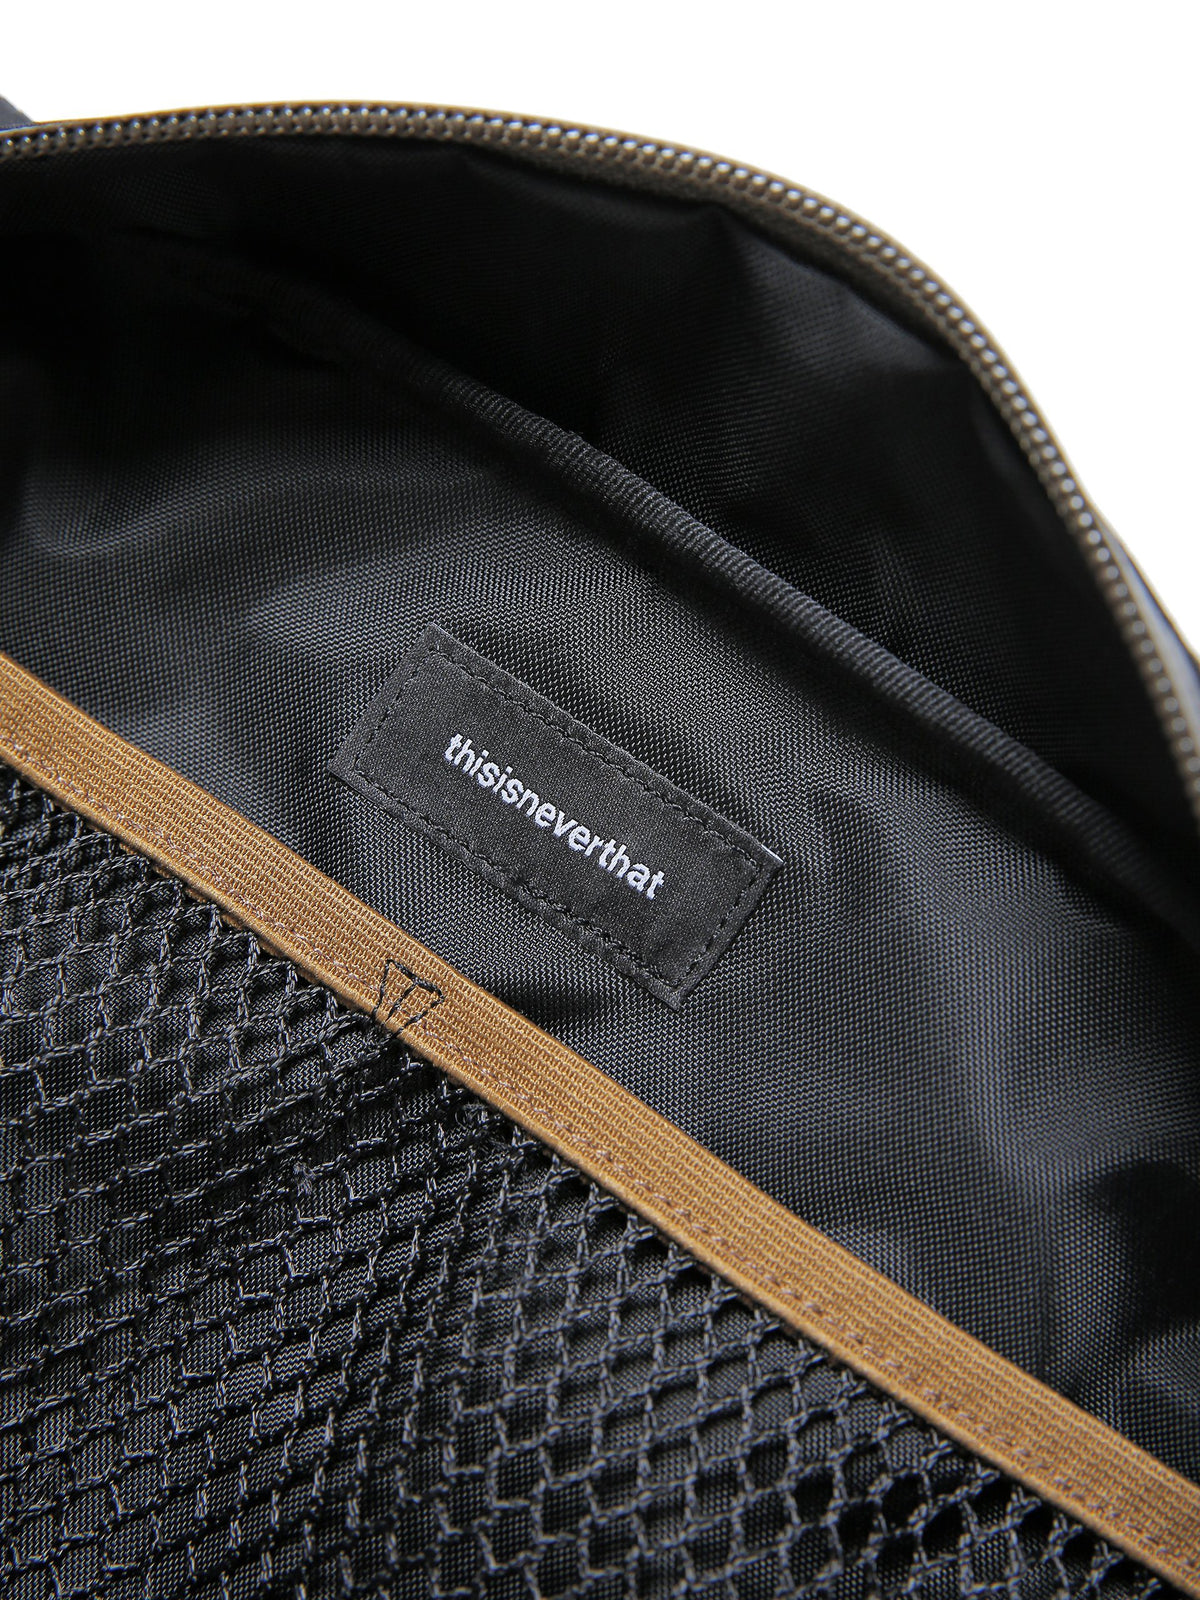 SFX 7 Shoulder Bag Bag